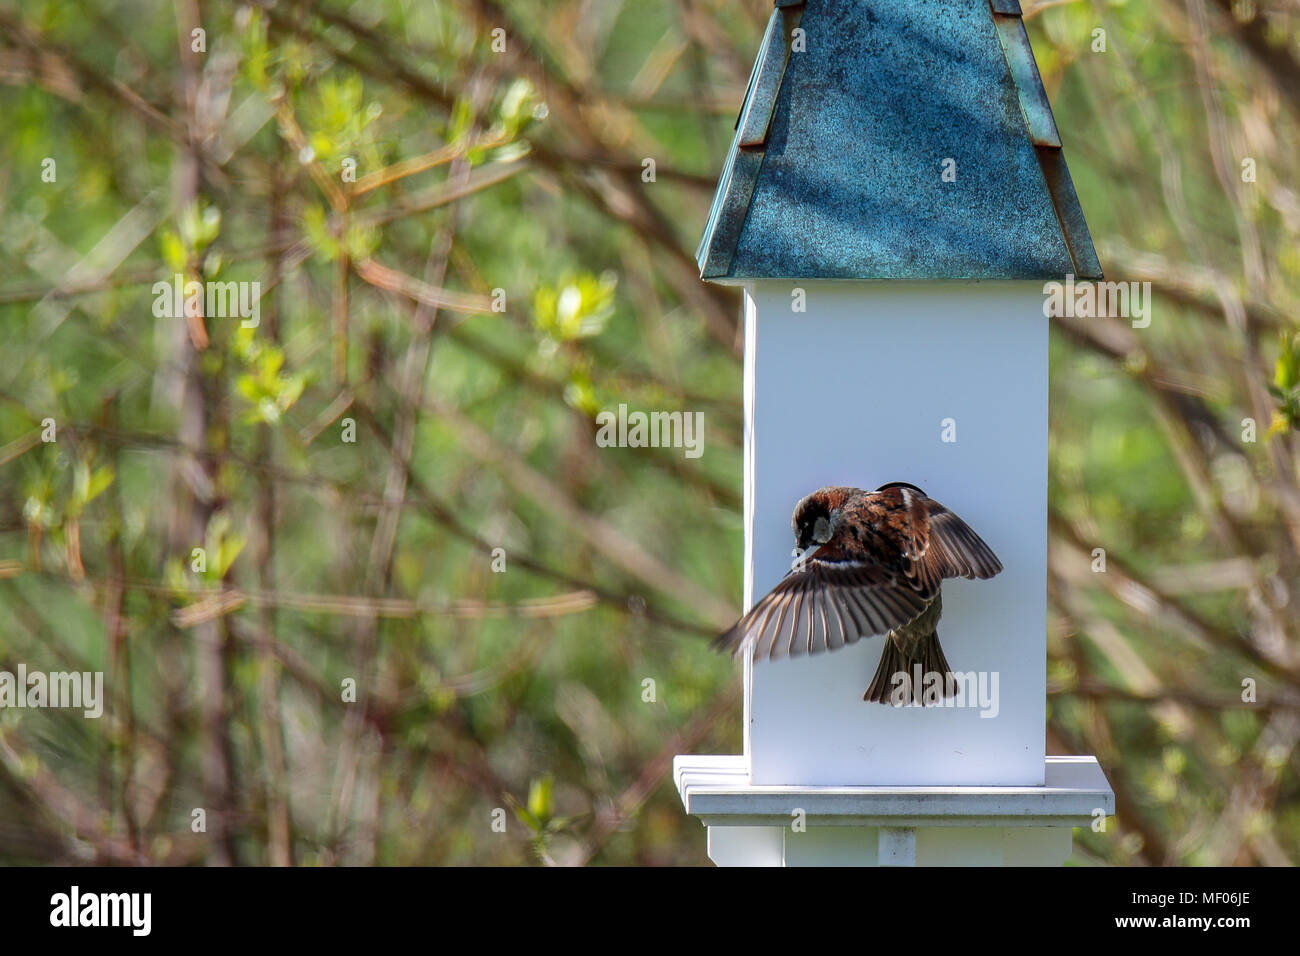 Bird feeding babies in bird house Stock Photo